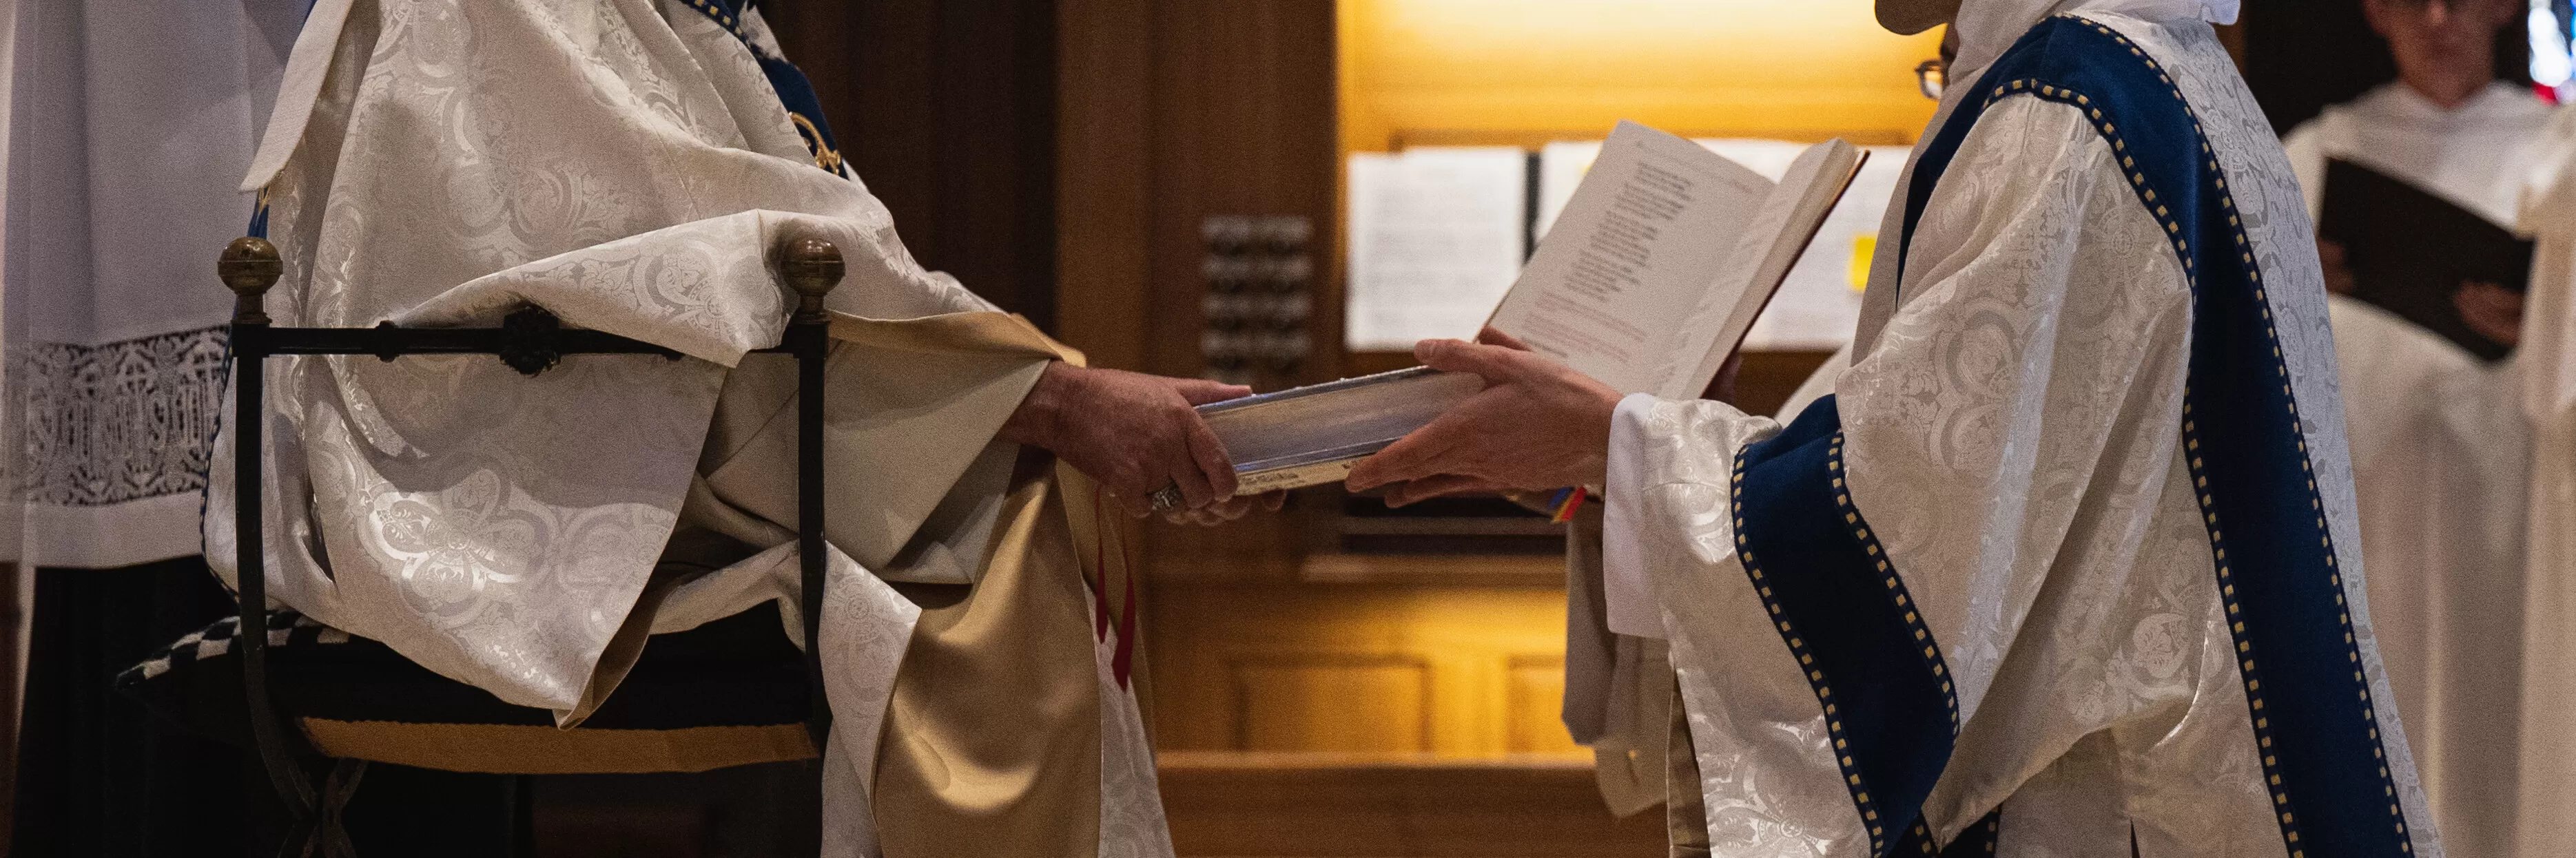 Diaconate Ordinations - Donation